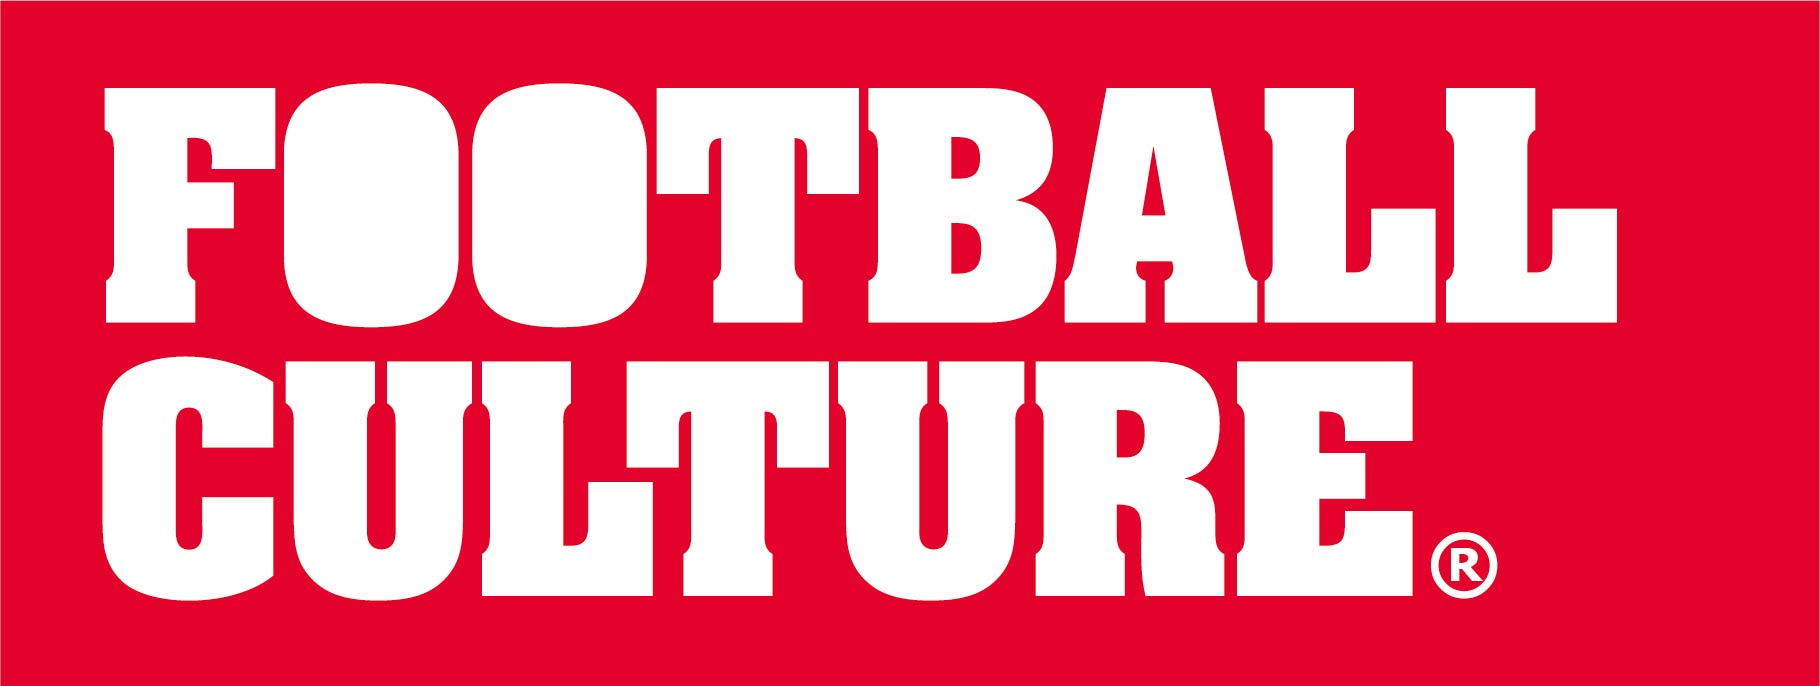 footballculture logo